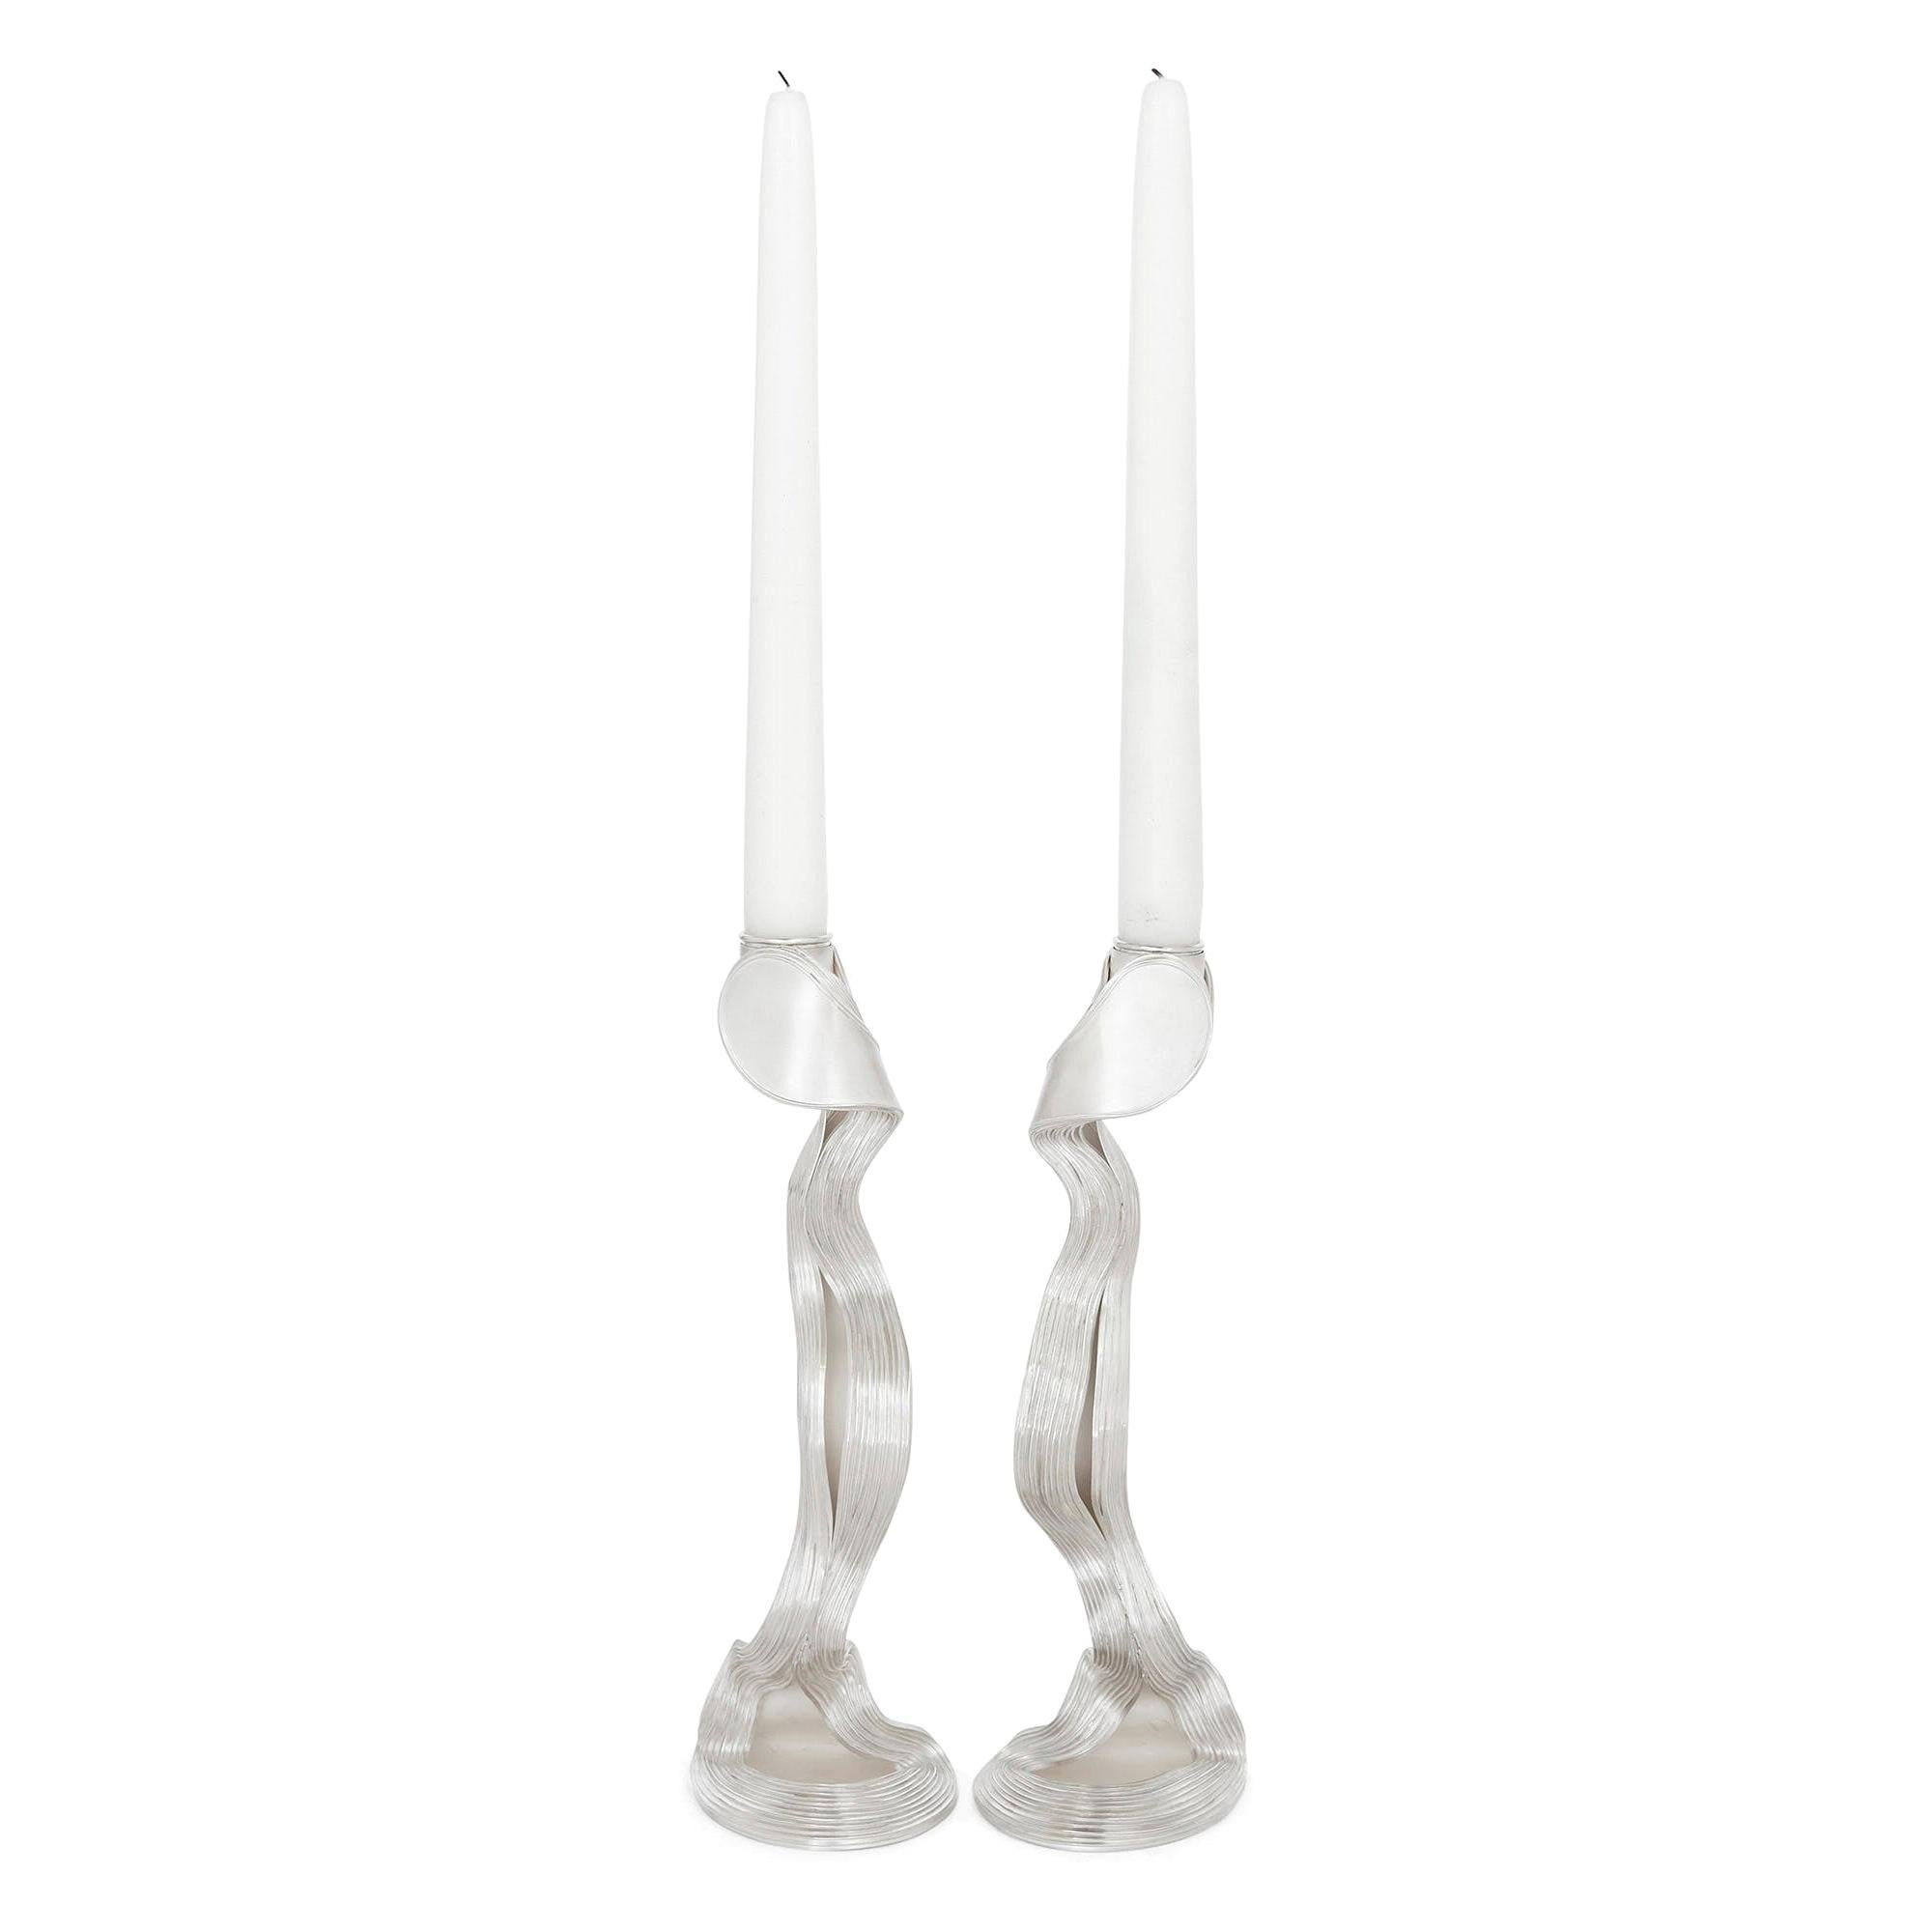 Contemporary Design Two Sculptural Silver Candlesticks by Nan Nan Liu For Sale